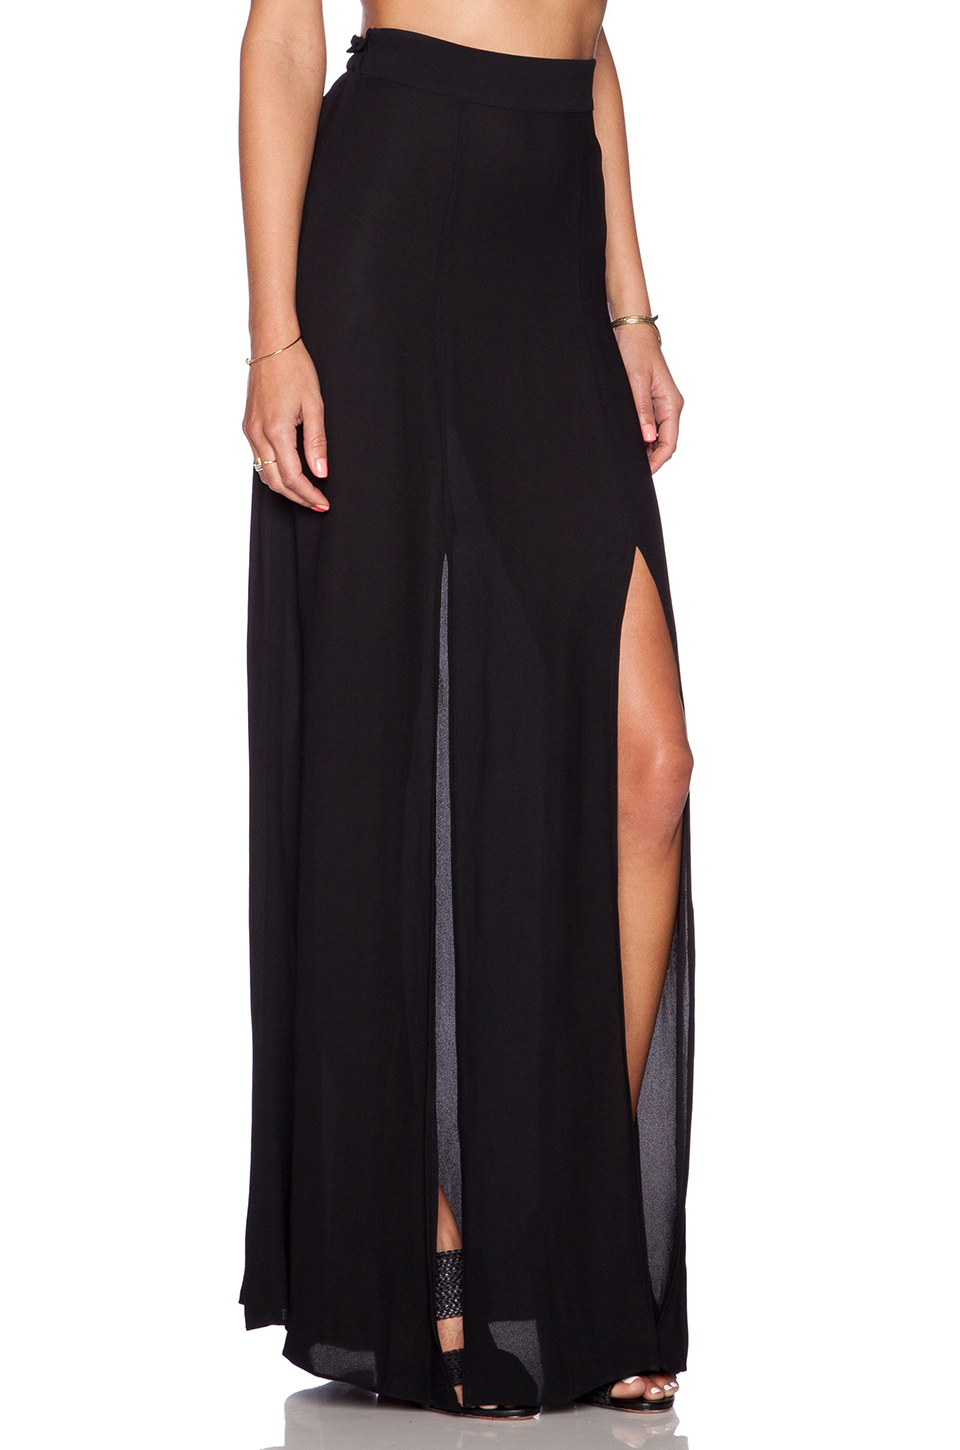 Lyst - L'Agence Double Slit Maxi Skirt in Black